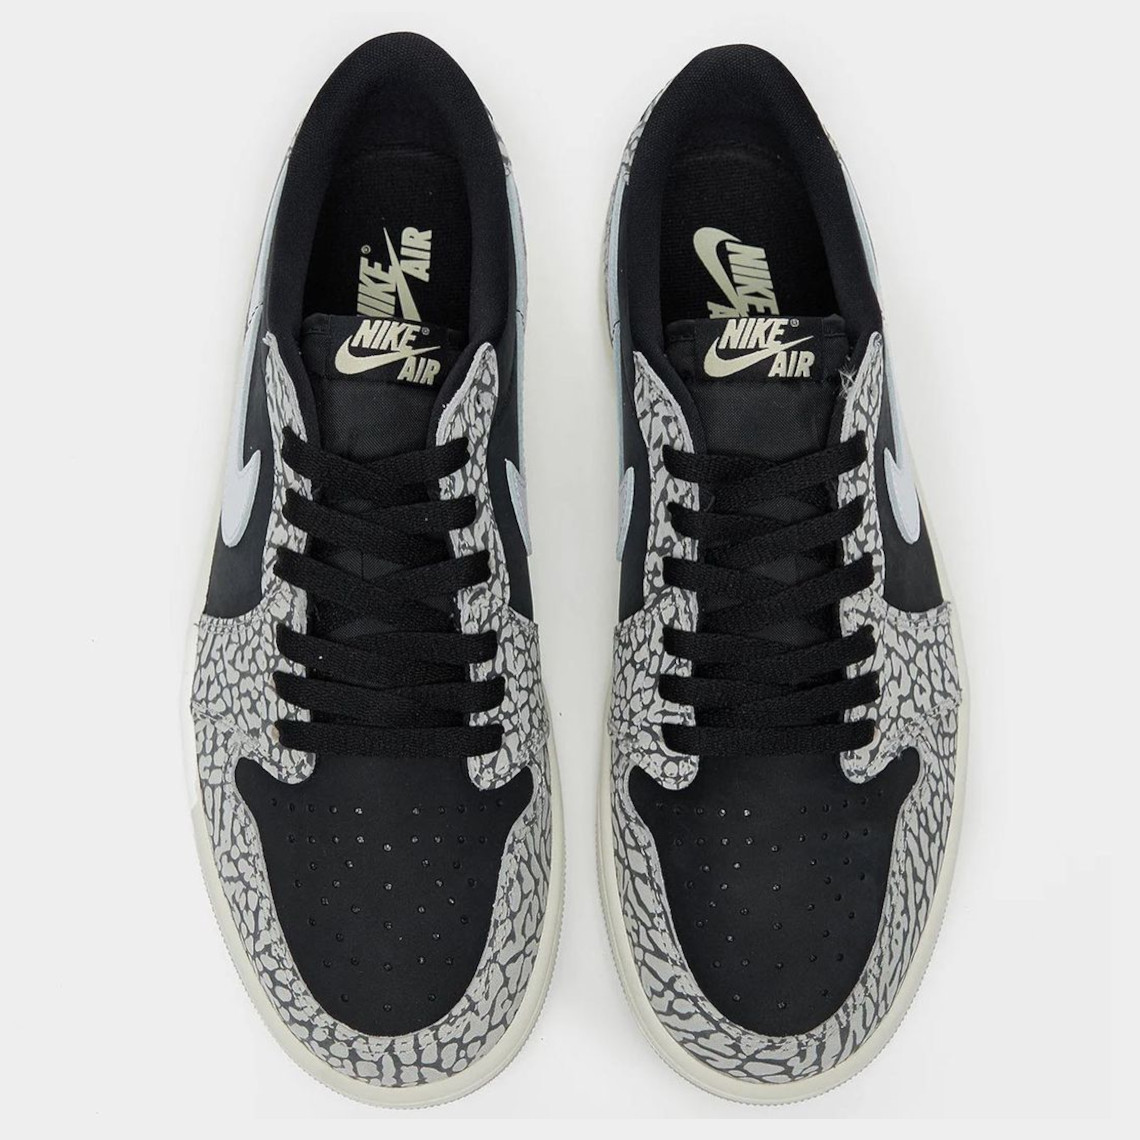 Air Jordan 1 Low OG "Black Cement" CZ0790-001 | SneakerNews.com